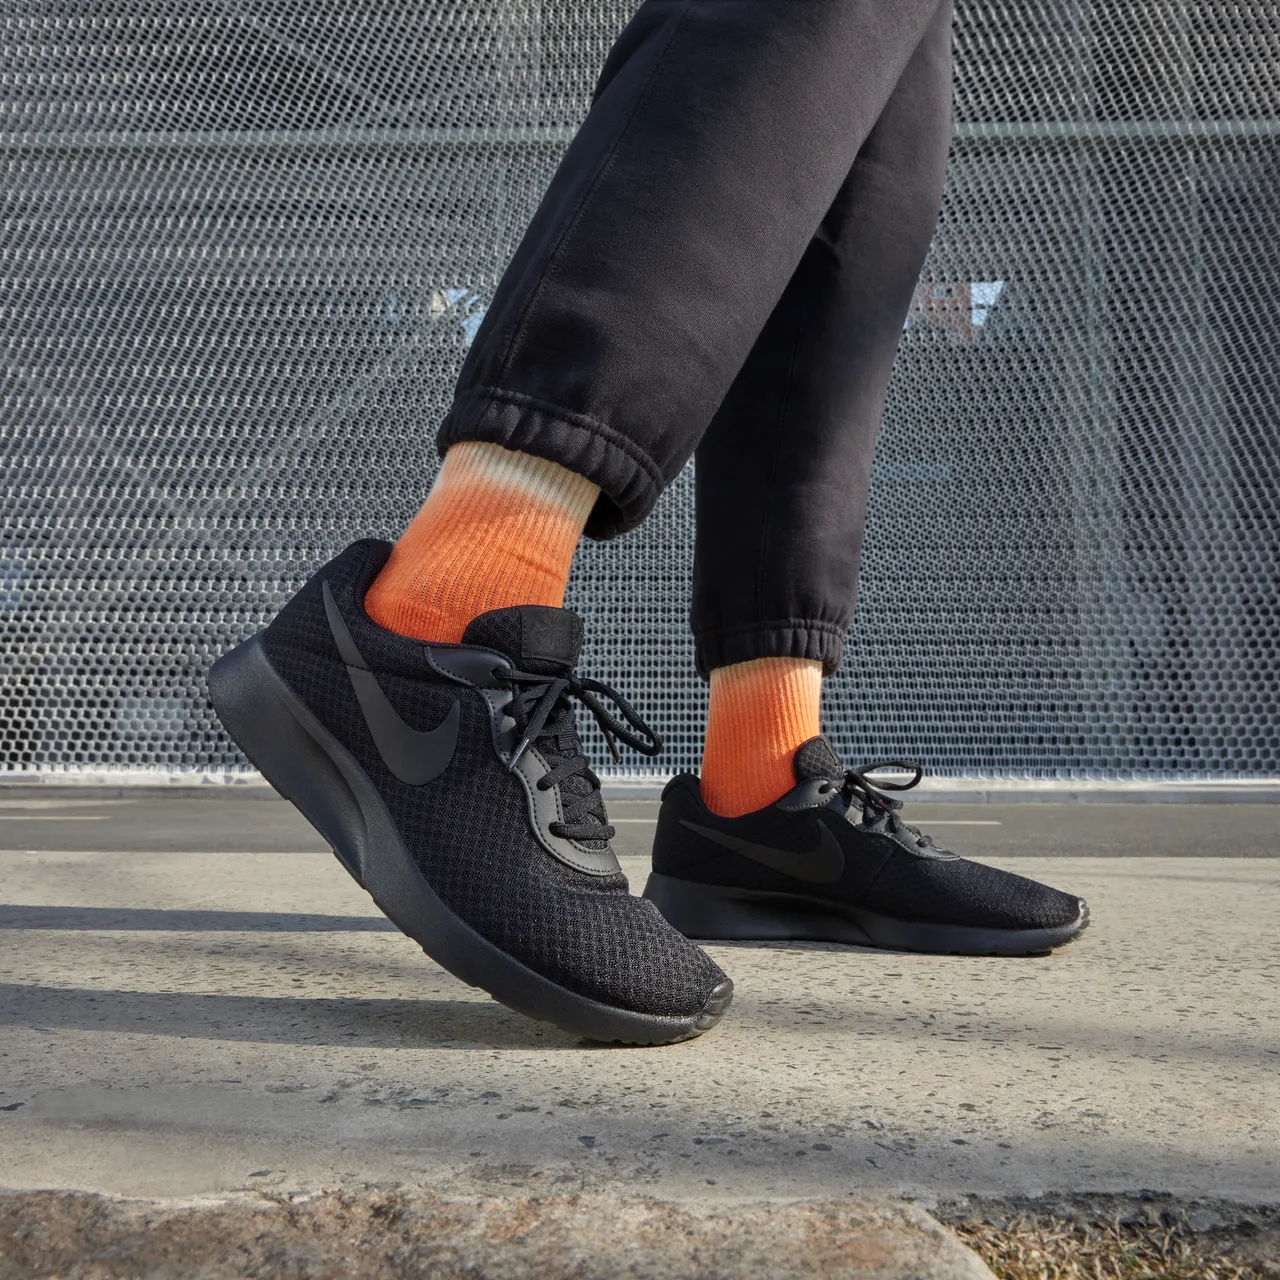 Nike Tanjun Men's Shoes - Black